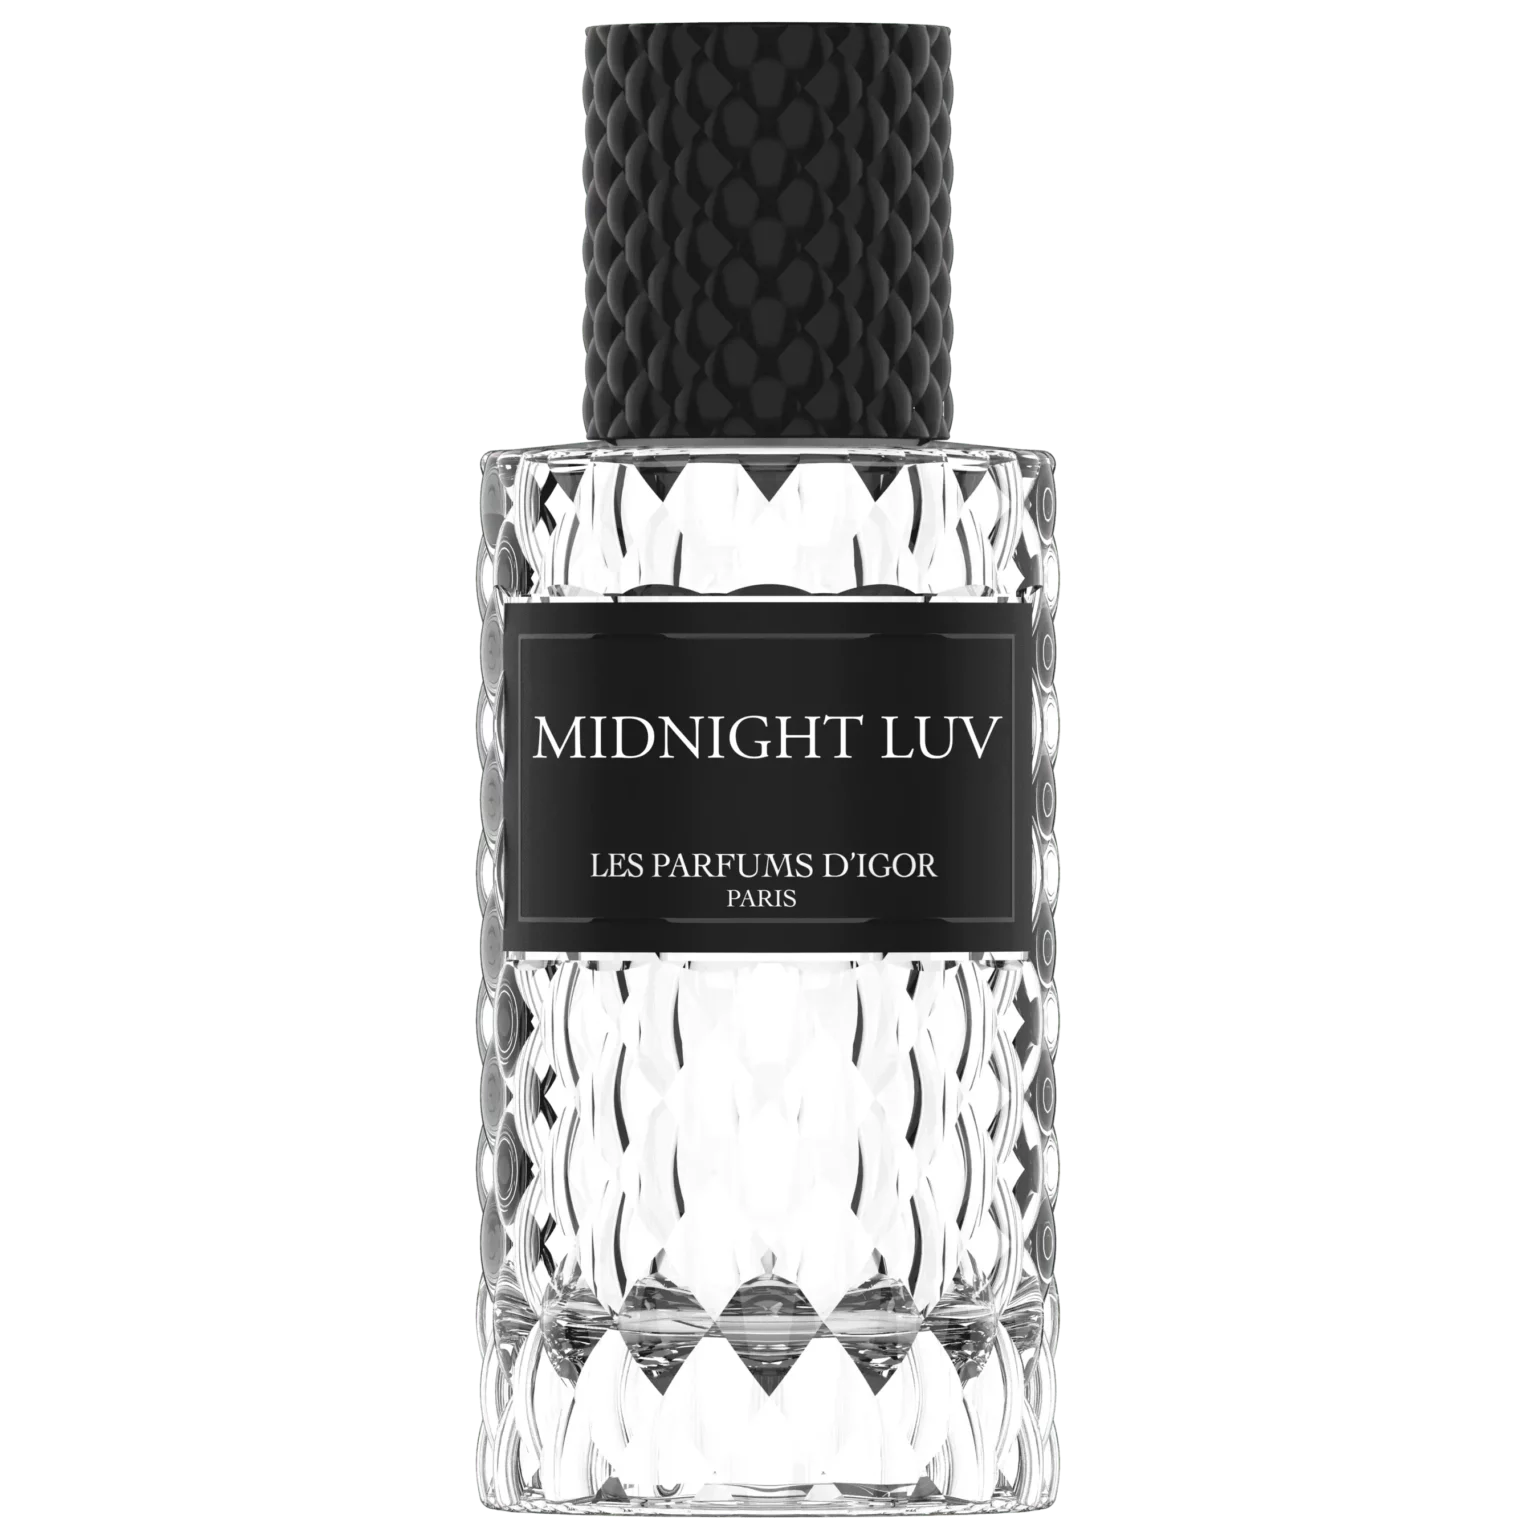 Midnight Luv - Les parfums d’igor